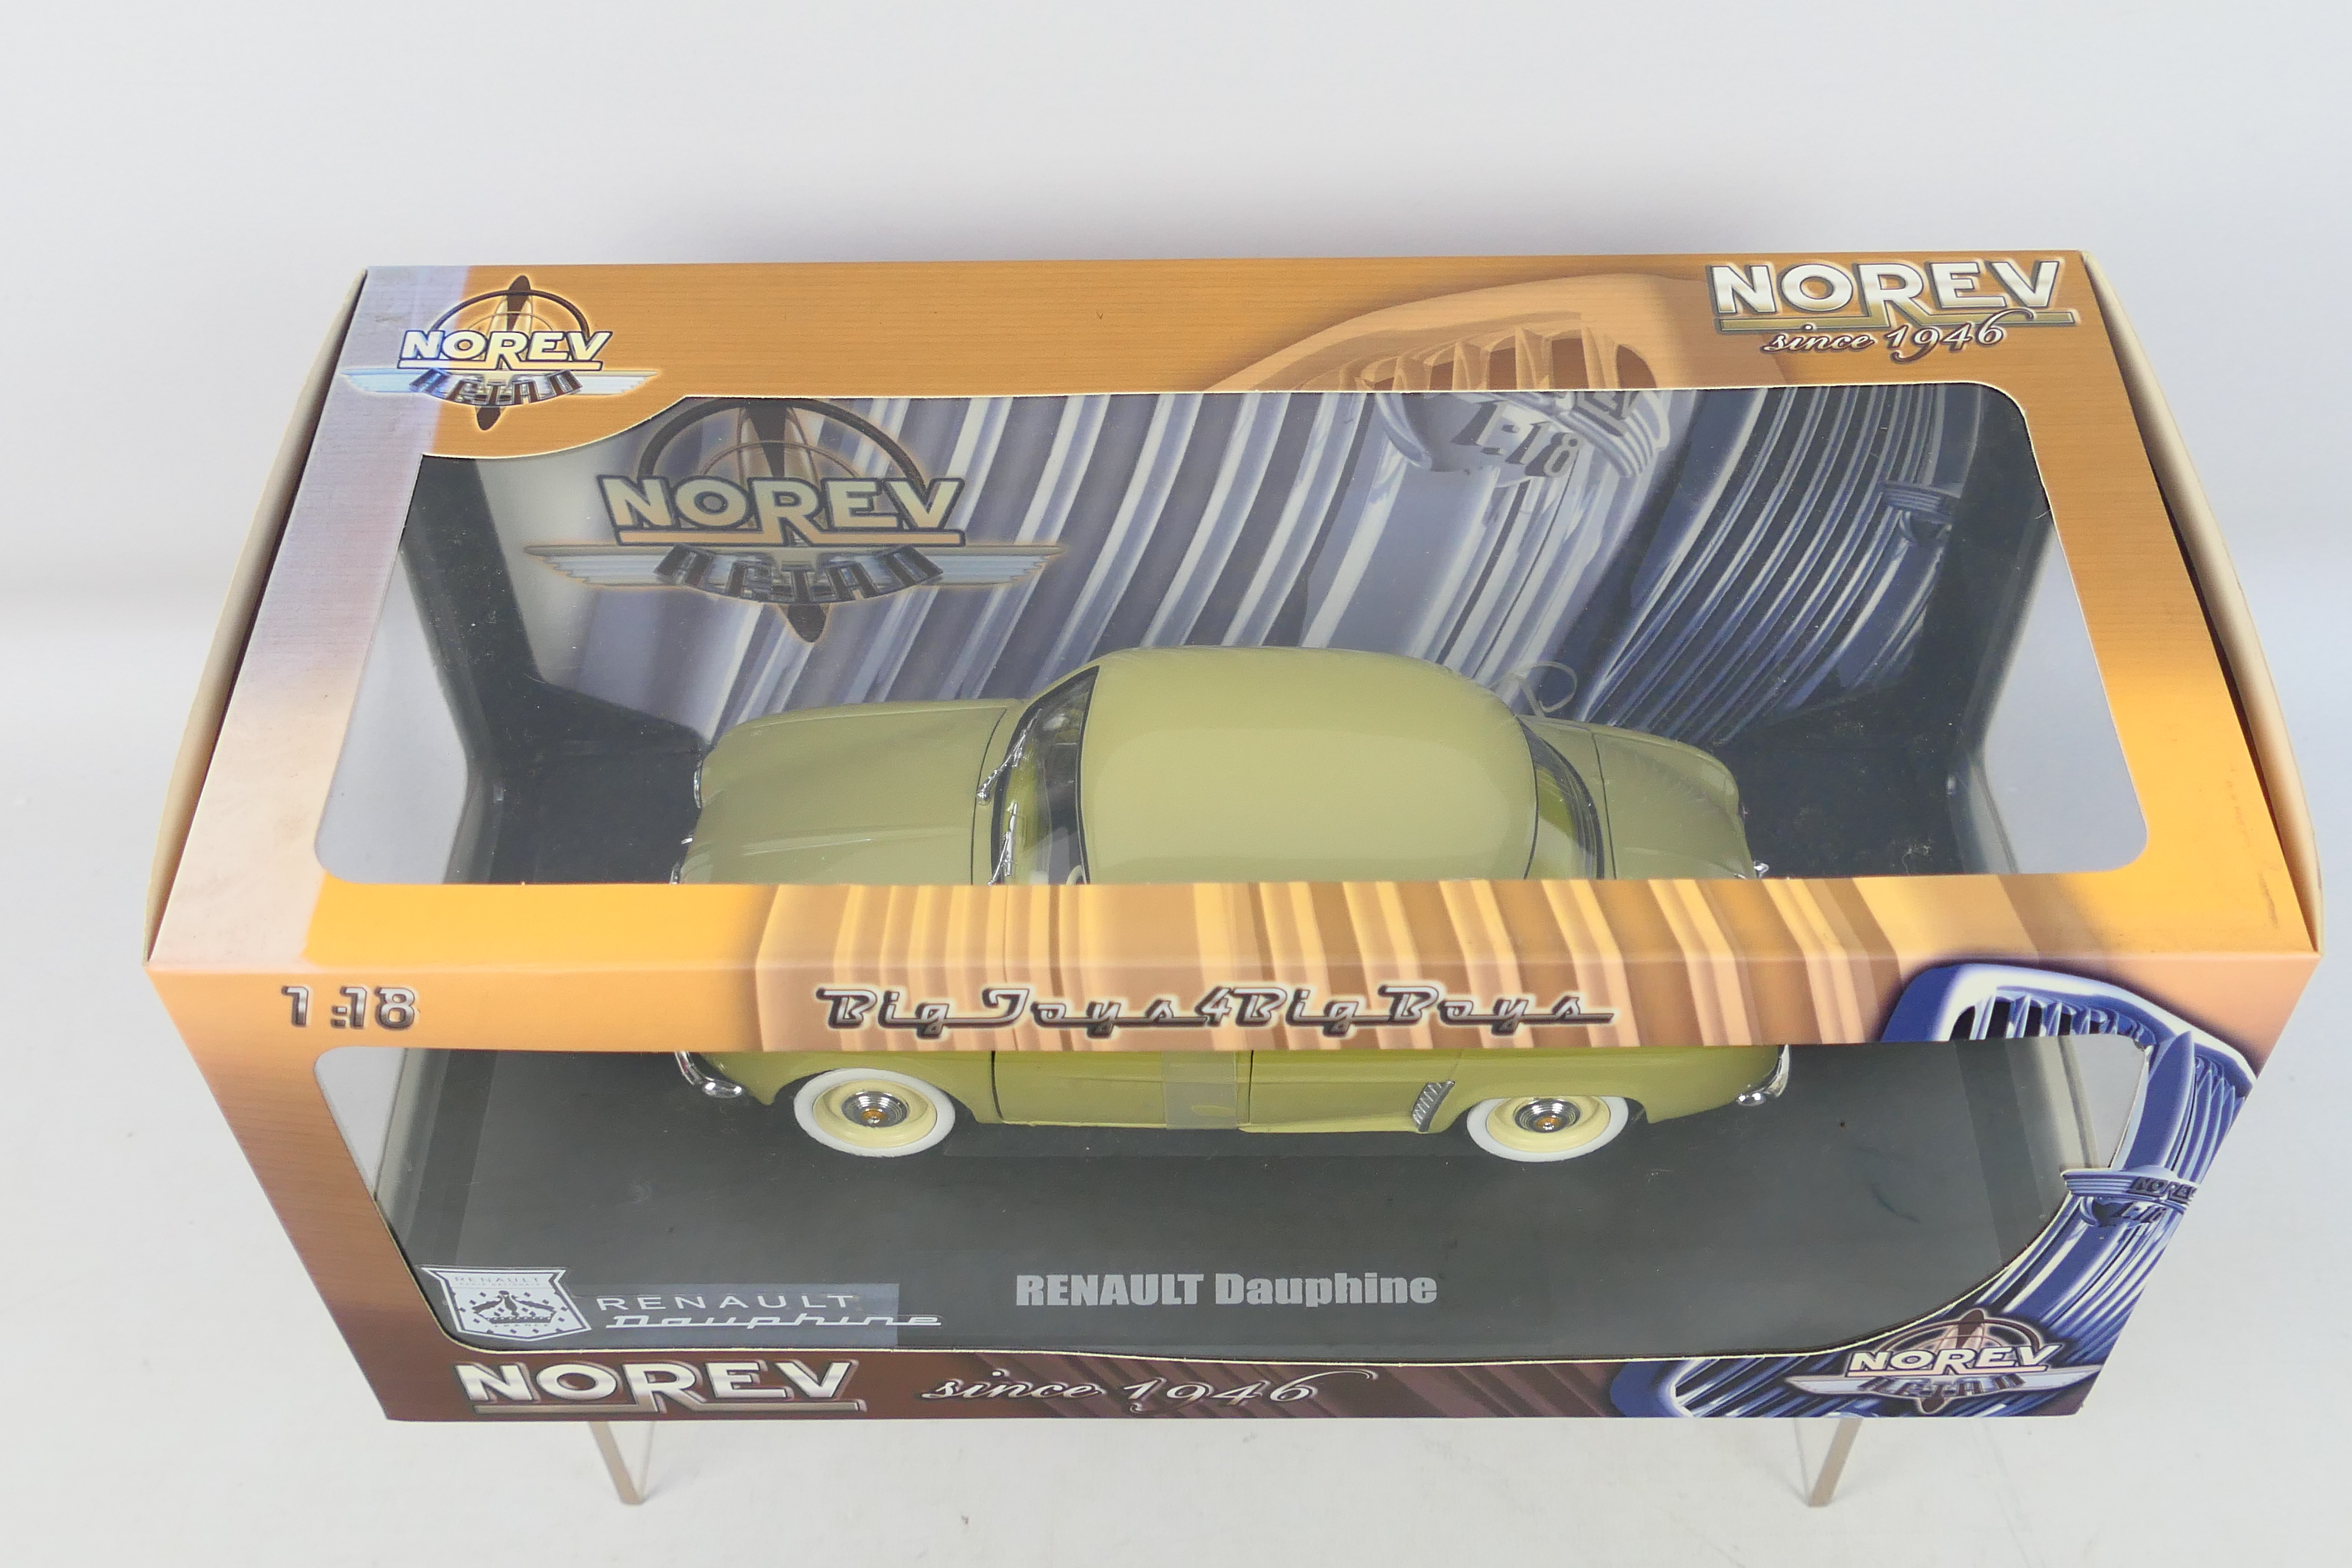 Norev - A boxed Norev #185164 1:18 scale 1958 Renault Dauphine. - Bild 2 aus 2